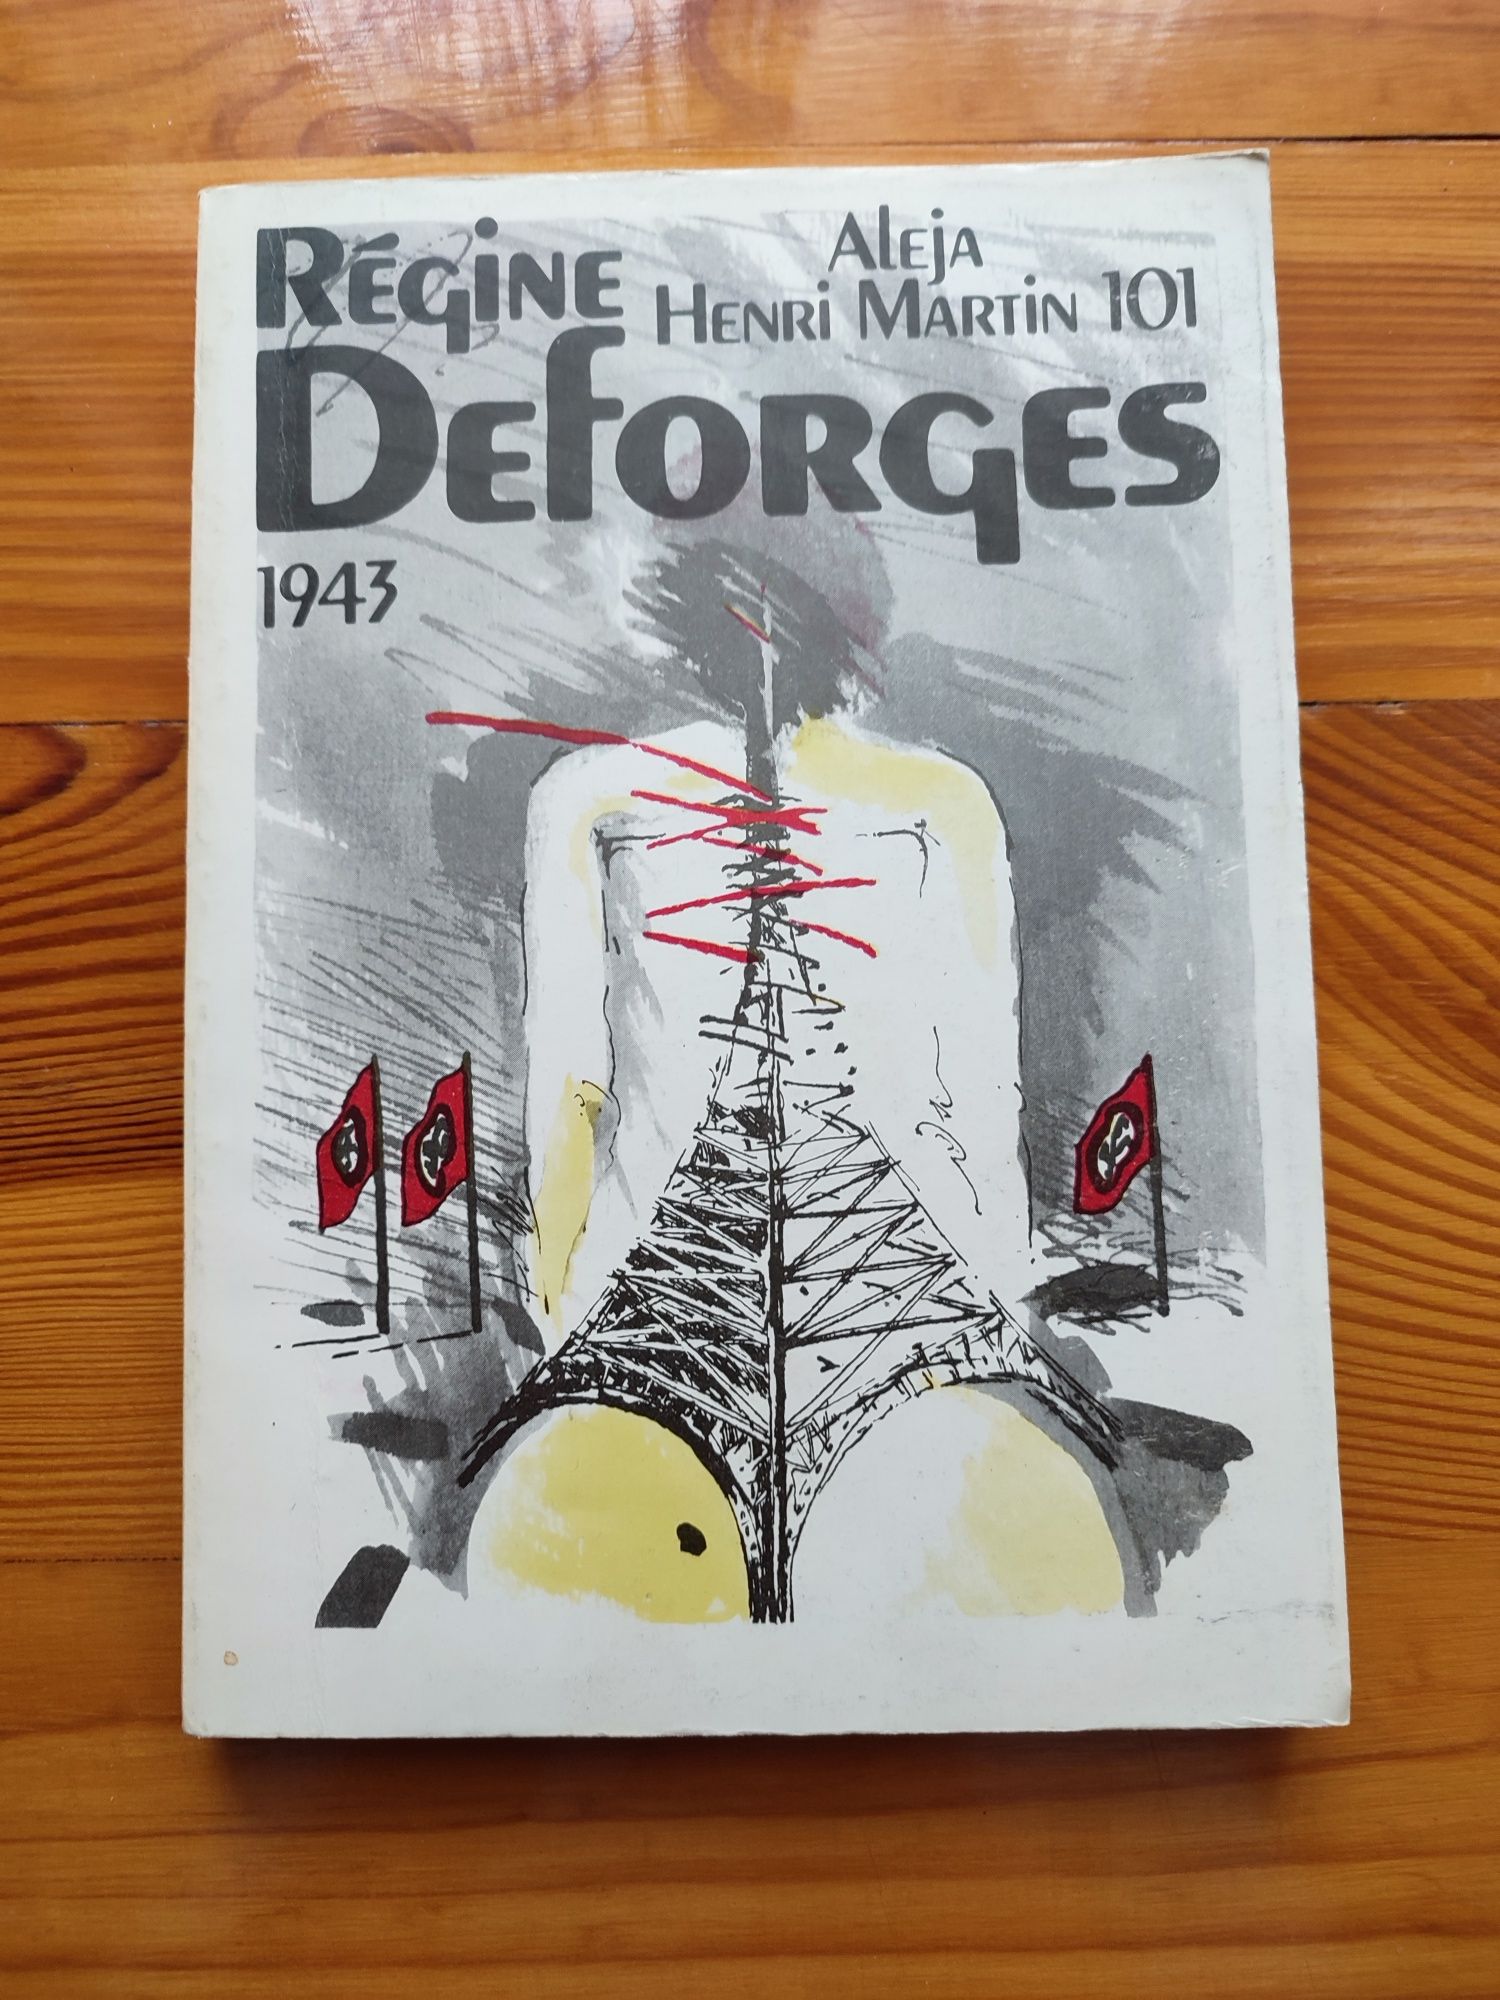 Aleja Henri Martin 101 Régine Deforges